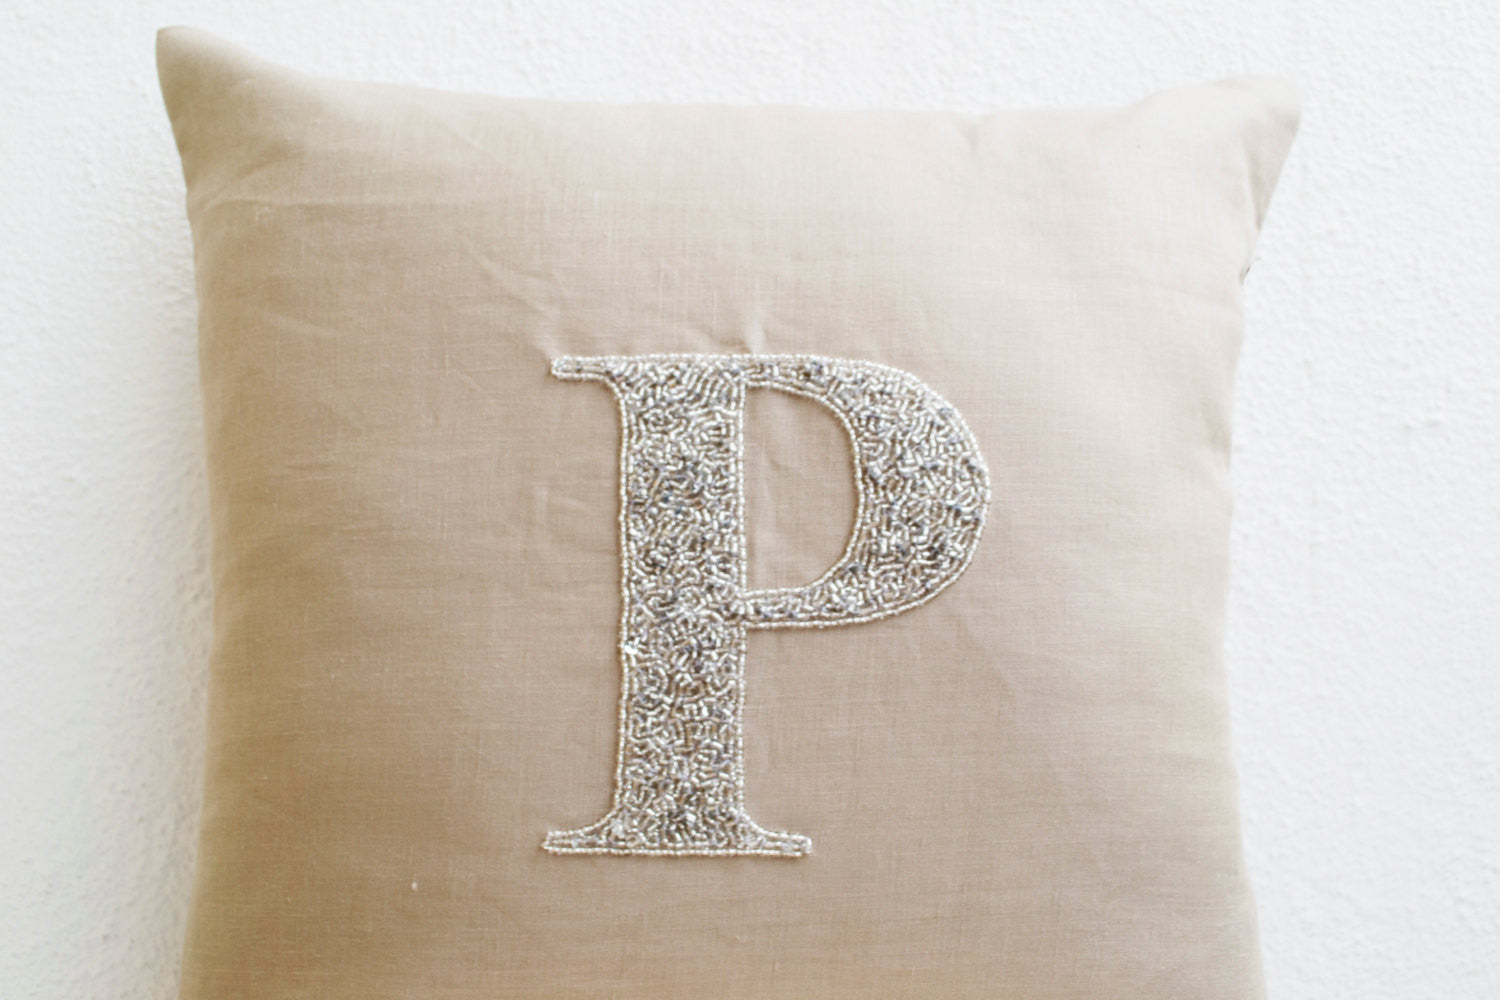 Handmade customized beige gray linen pillow with monogram